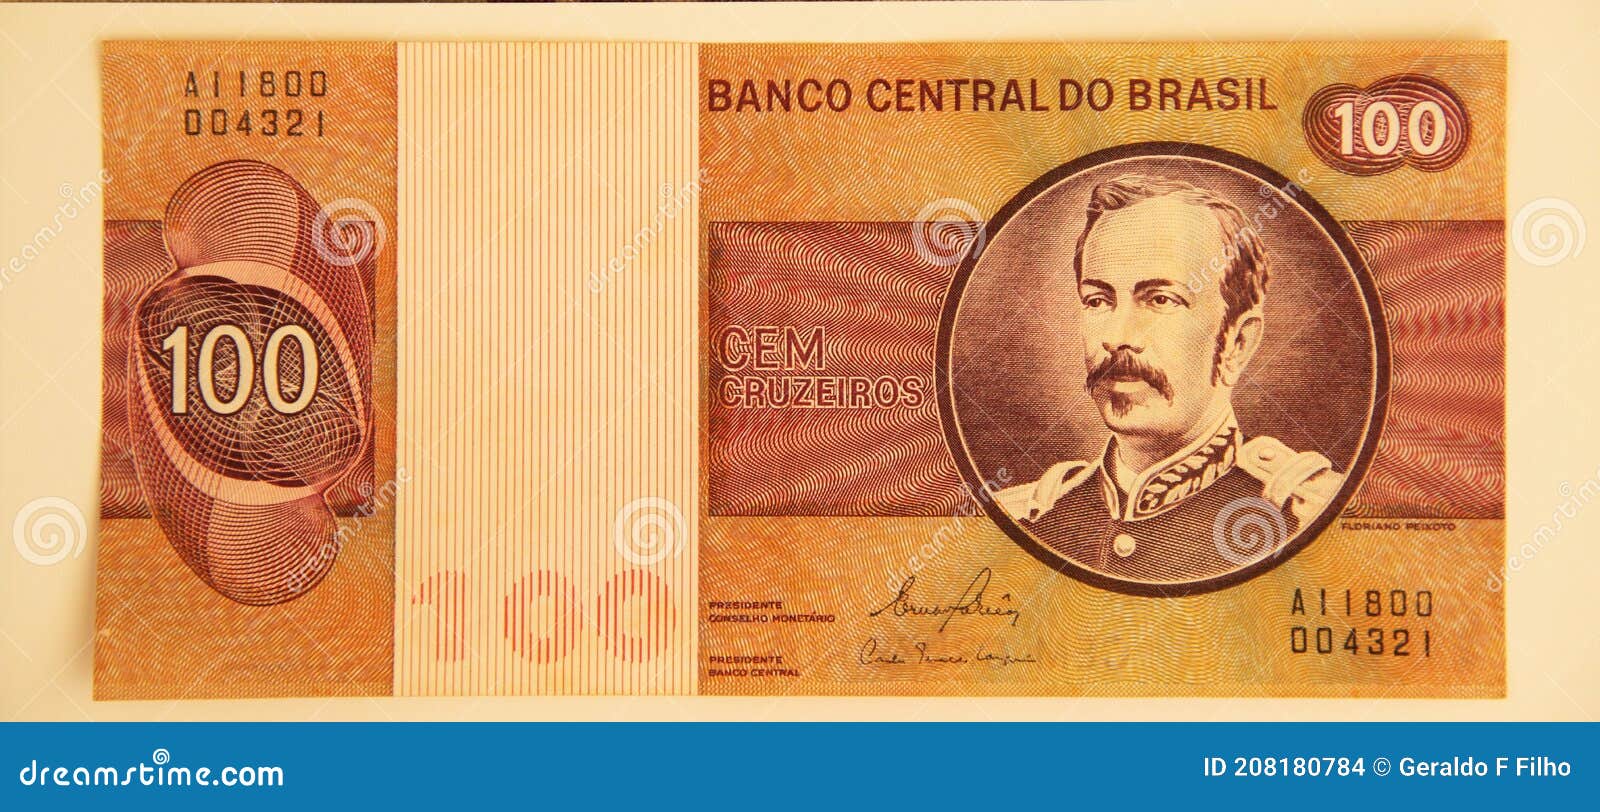 Banco Central Do Brasil 100 CEM Cruzeiros Note Over Stamp On 100 “CEM  CRUZEIROS”